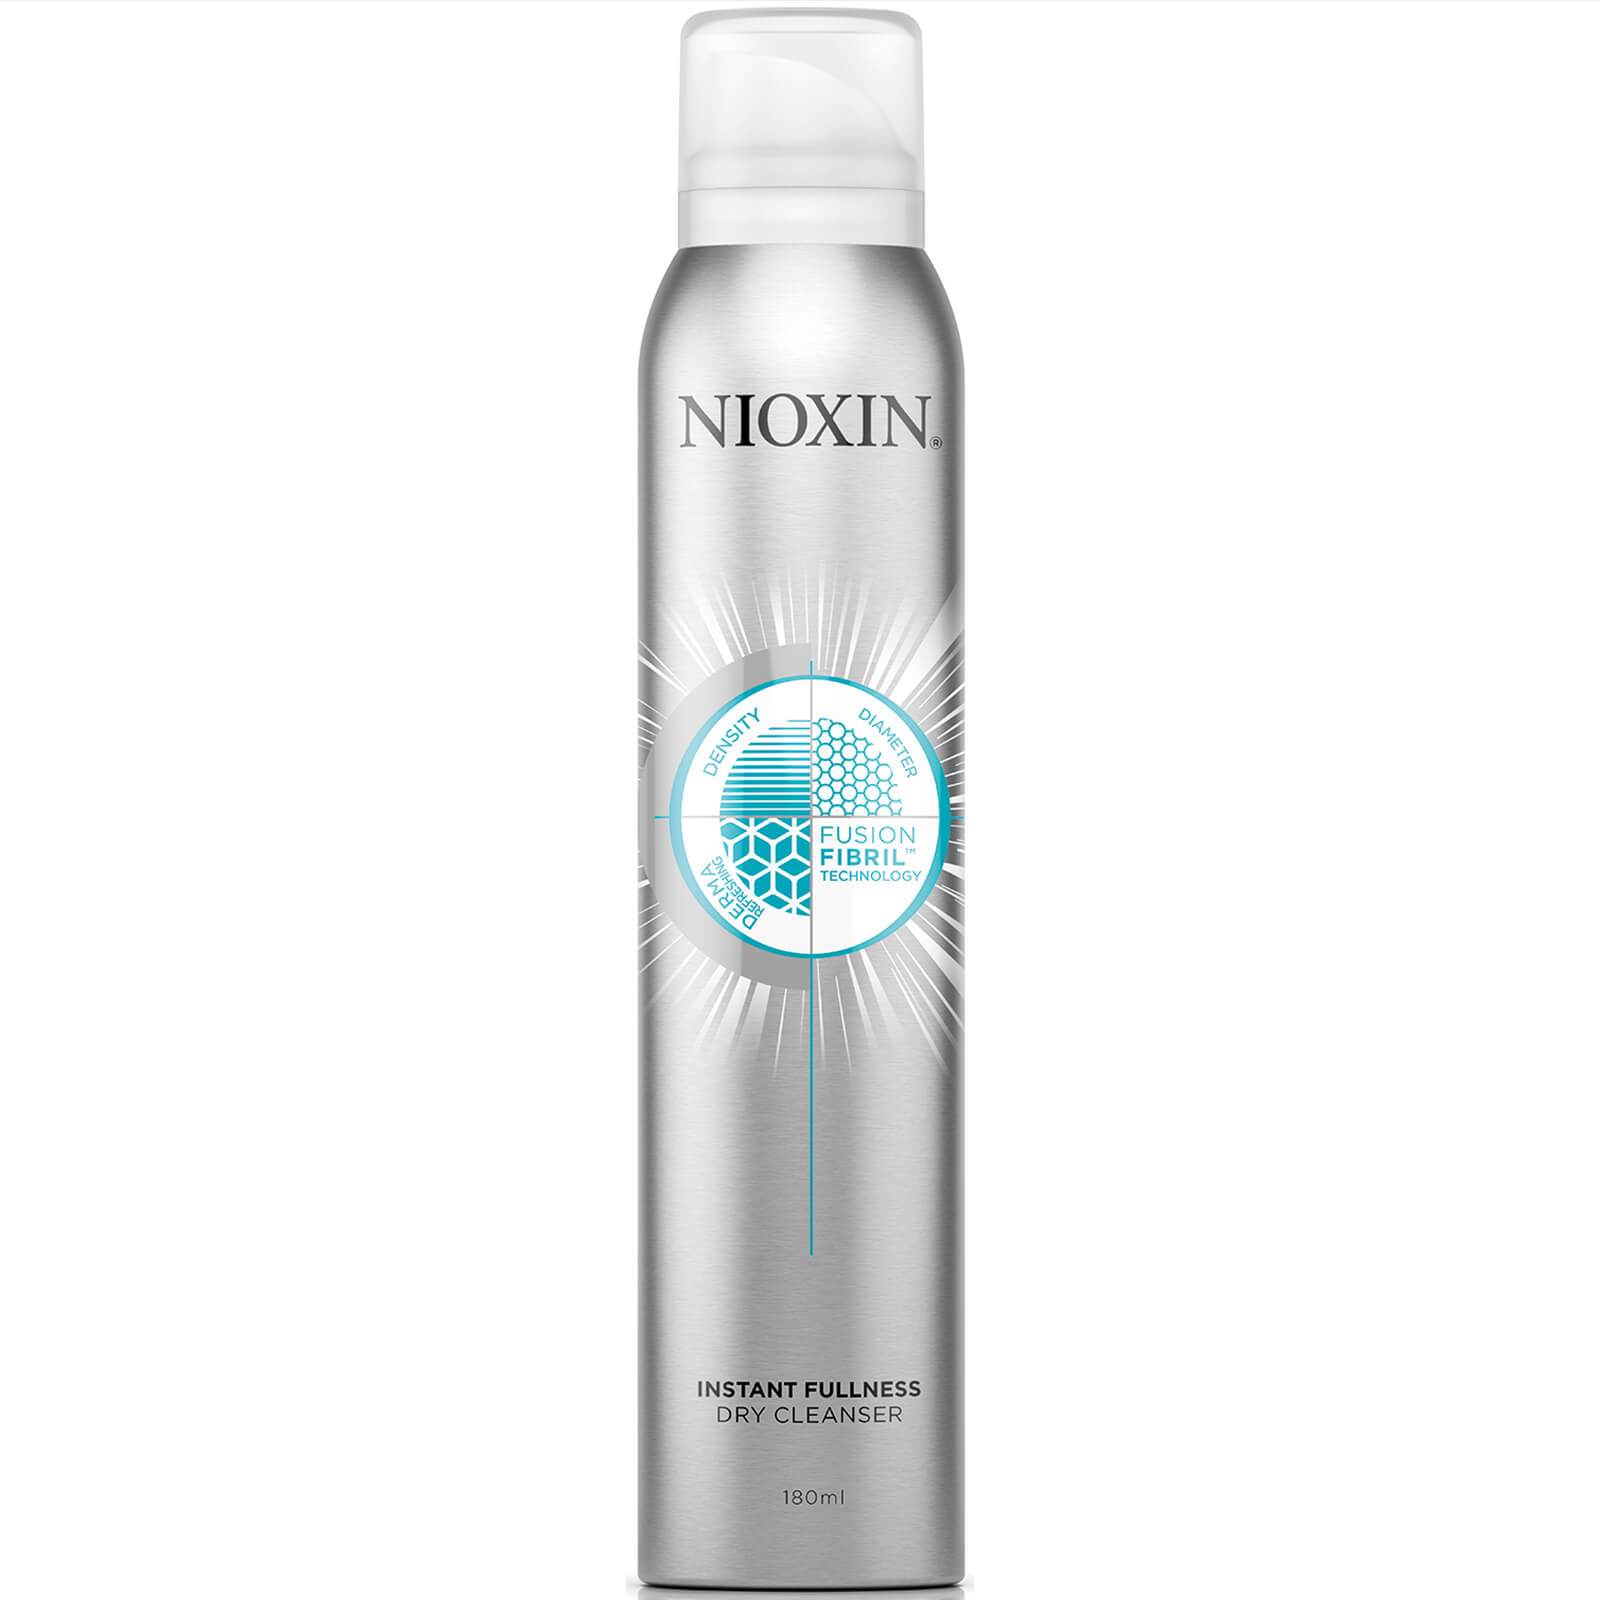 Nioxin Instant Full Dry Cleanser 180ml